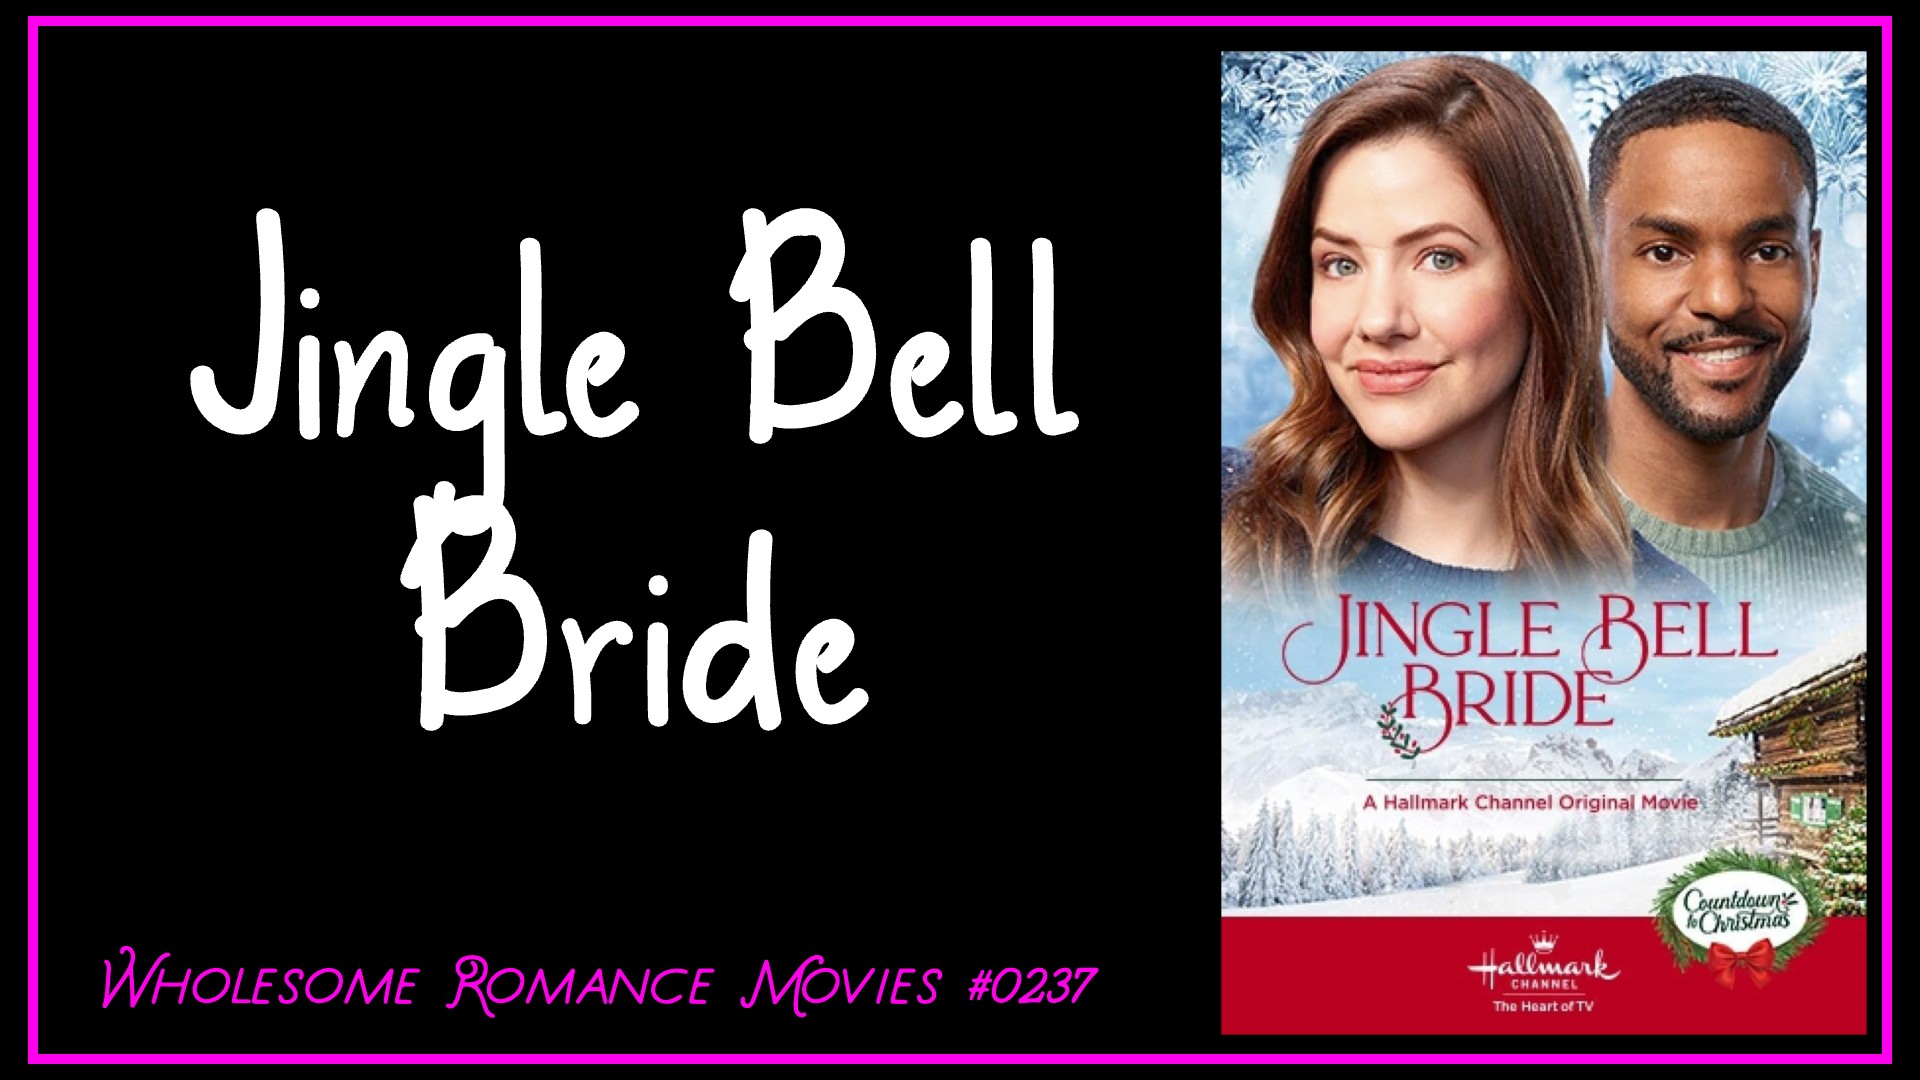 Jingle Bell Bride (2020) WRM Review